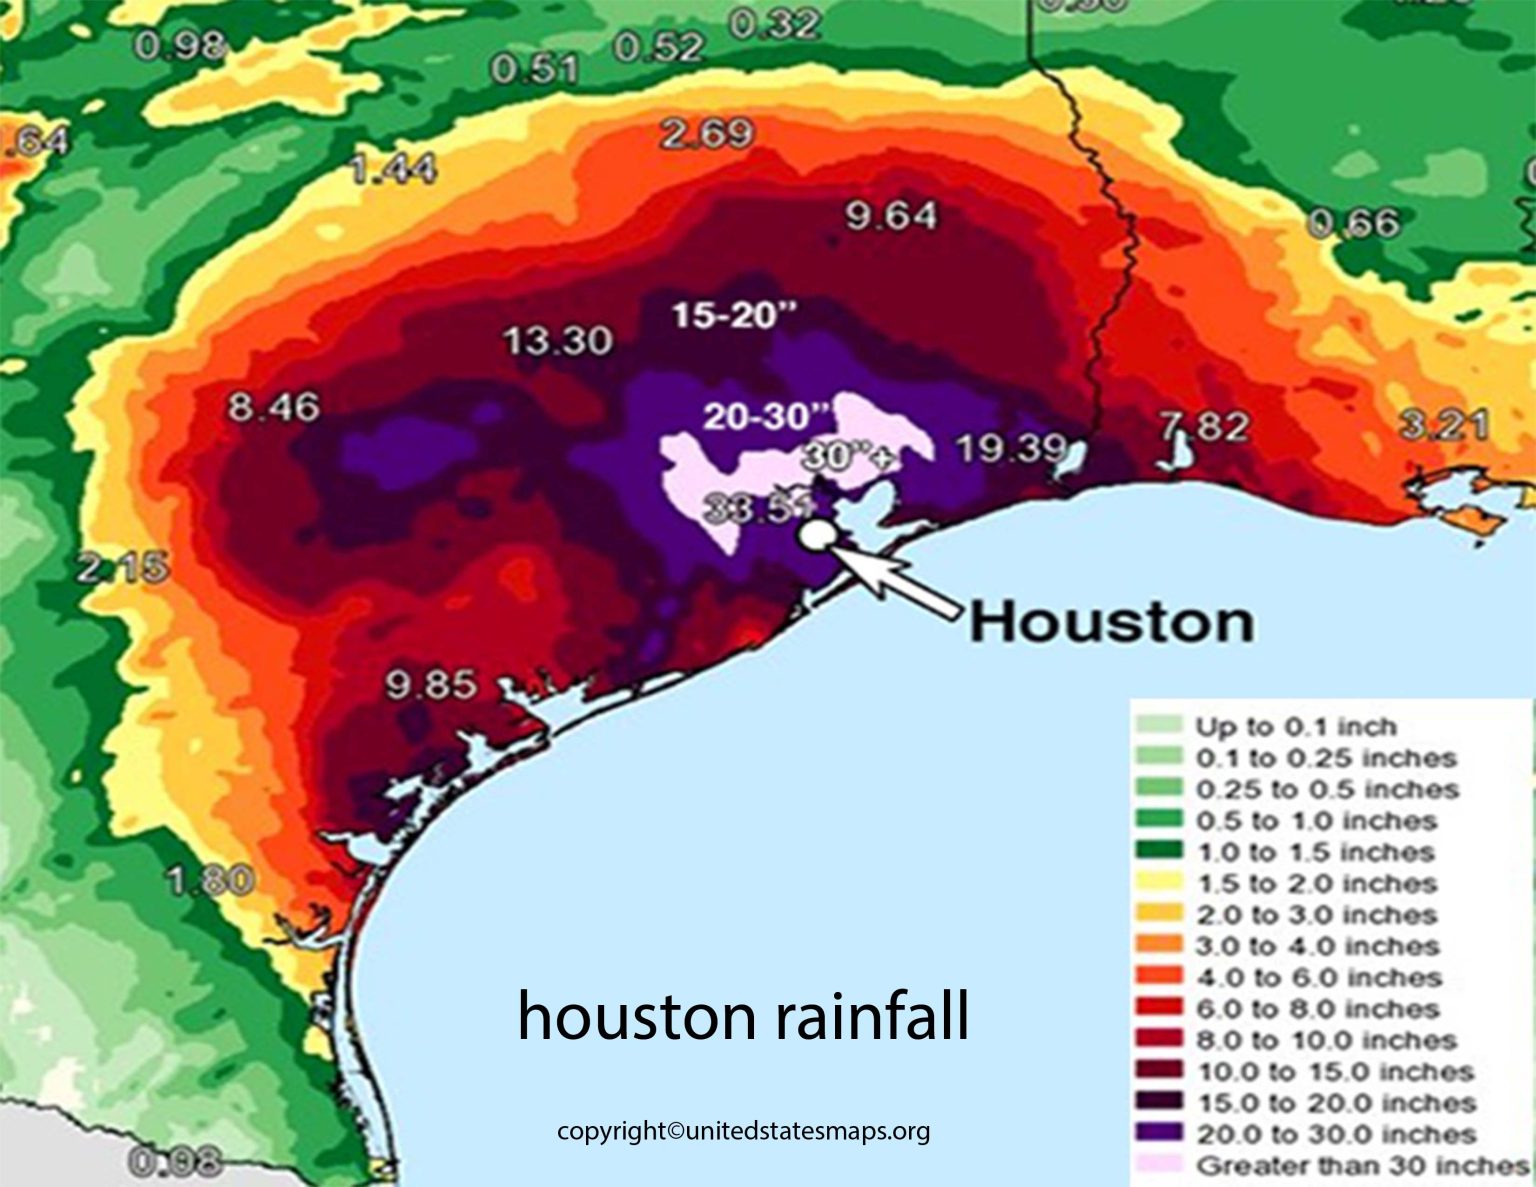 Houston Rainfall Map Rainfall Map of Houston